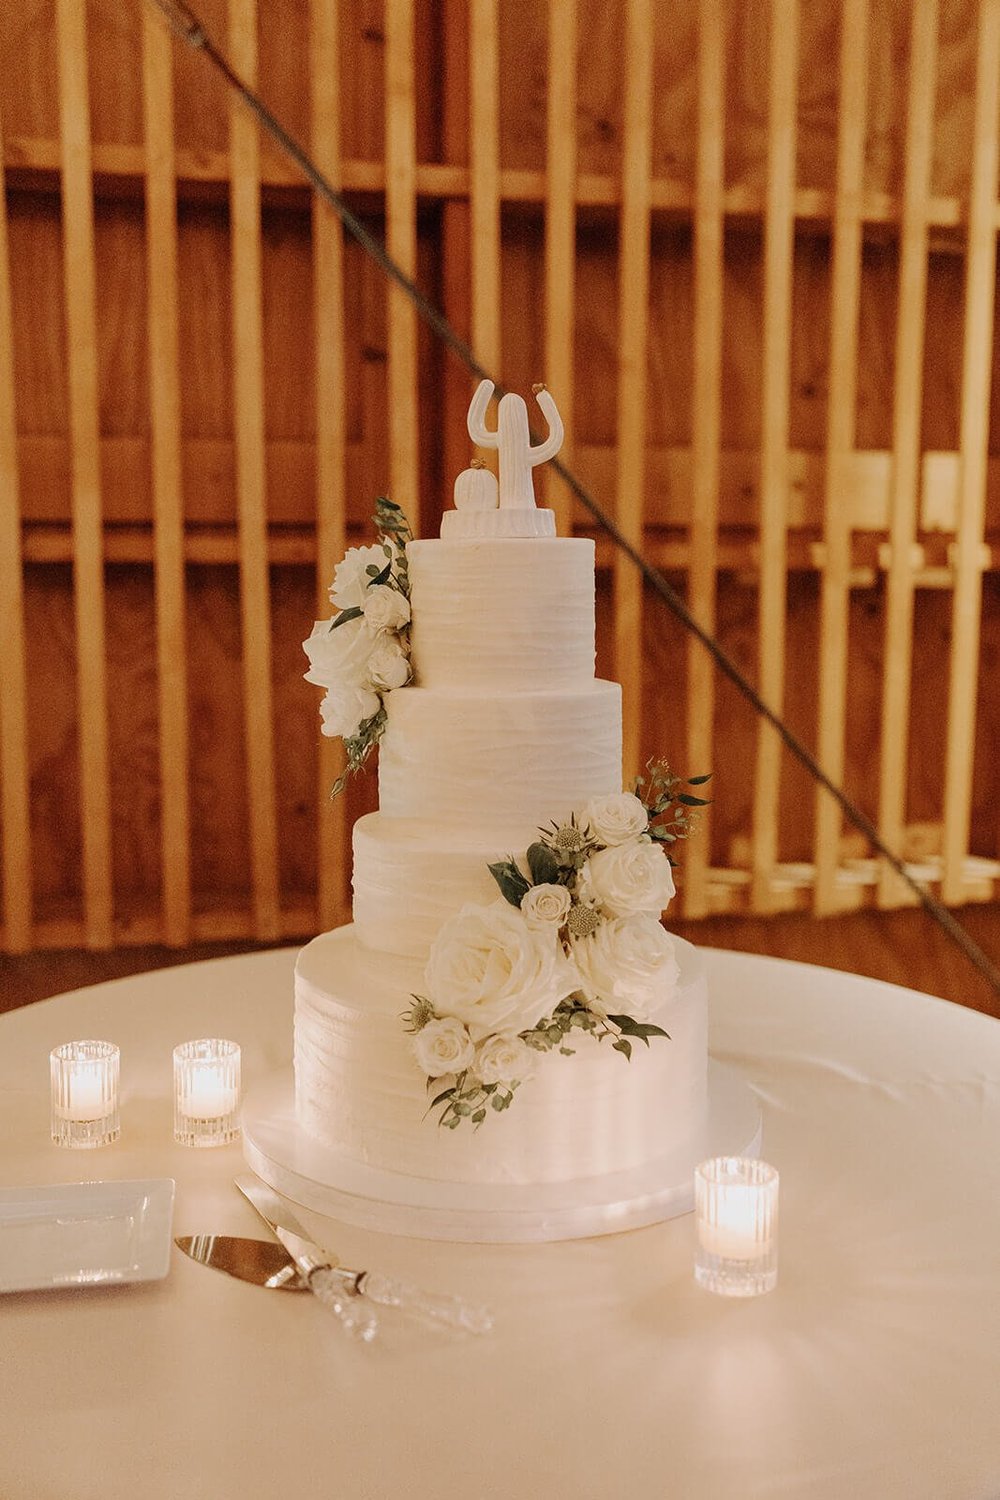 White three tier wedding cake with white florals